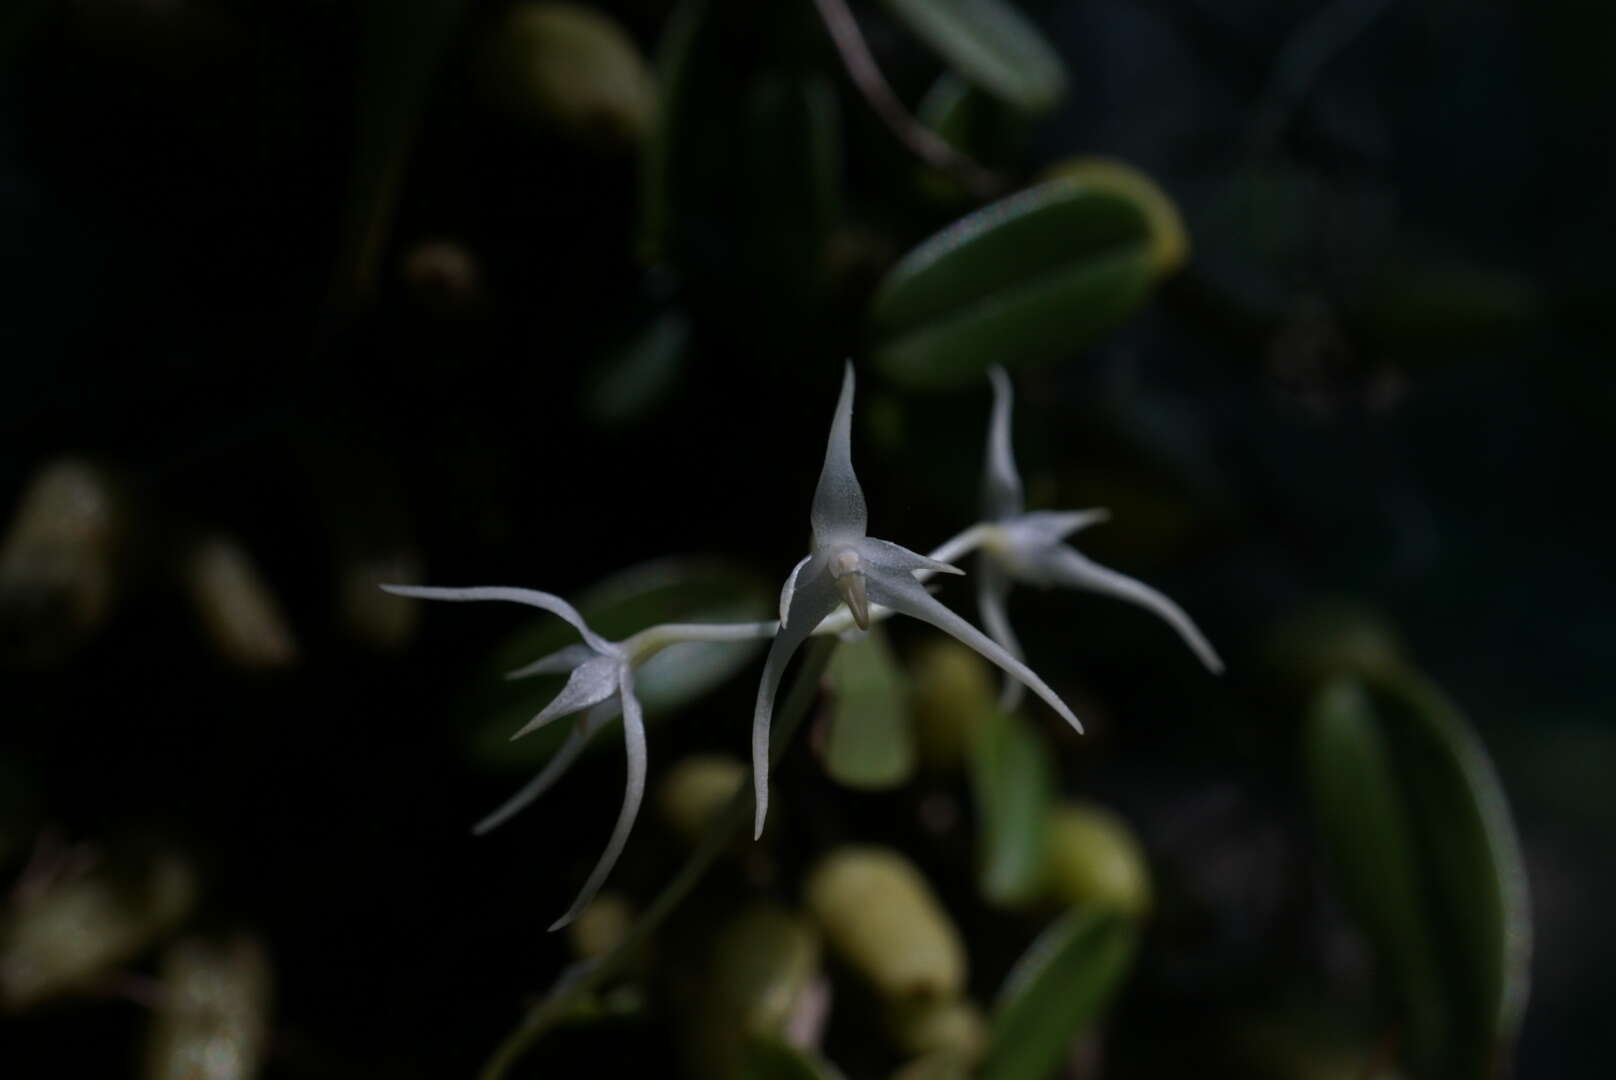 Image of Bulbophyllum kwangtungense Schltr.